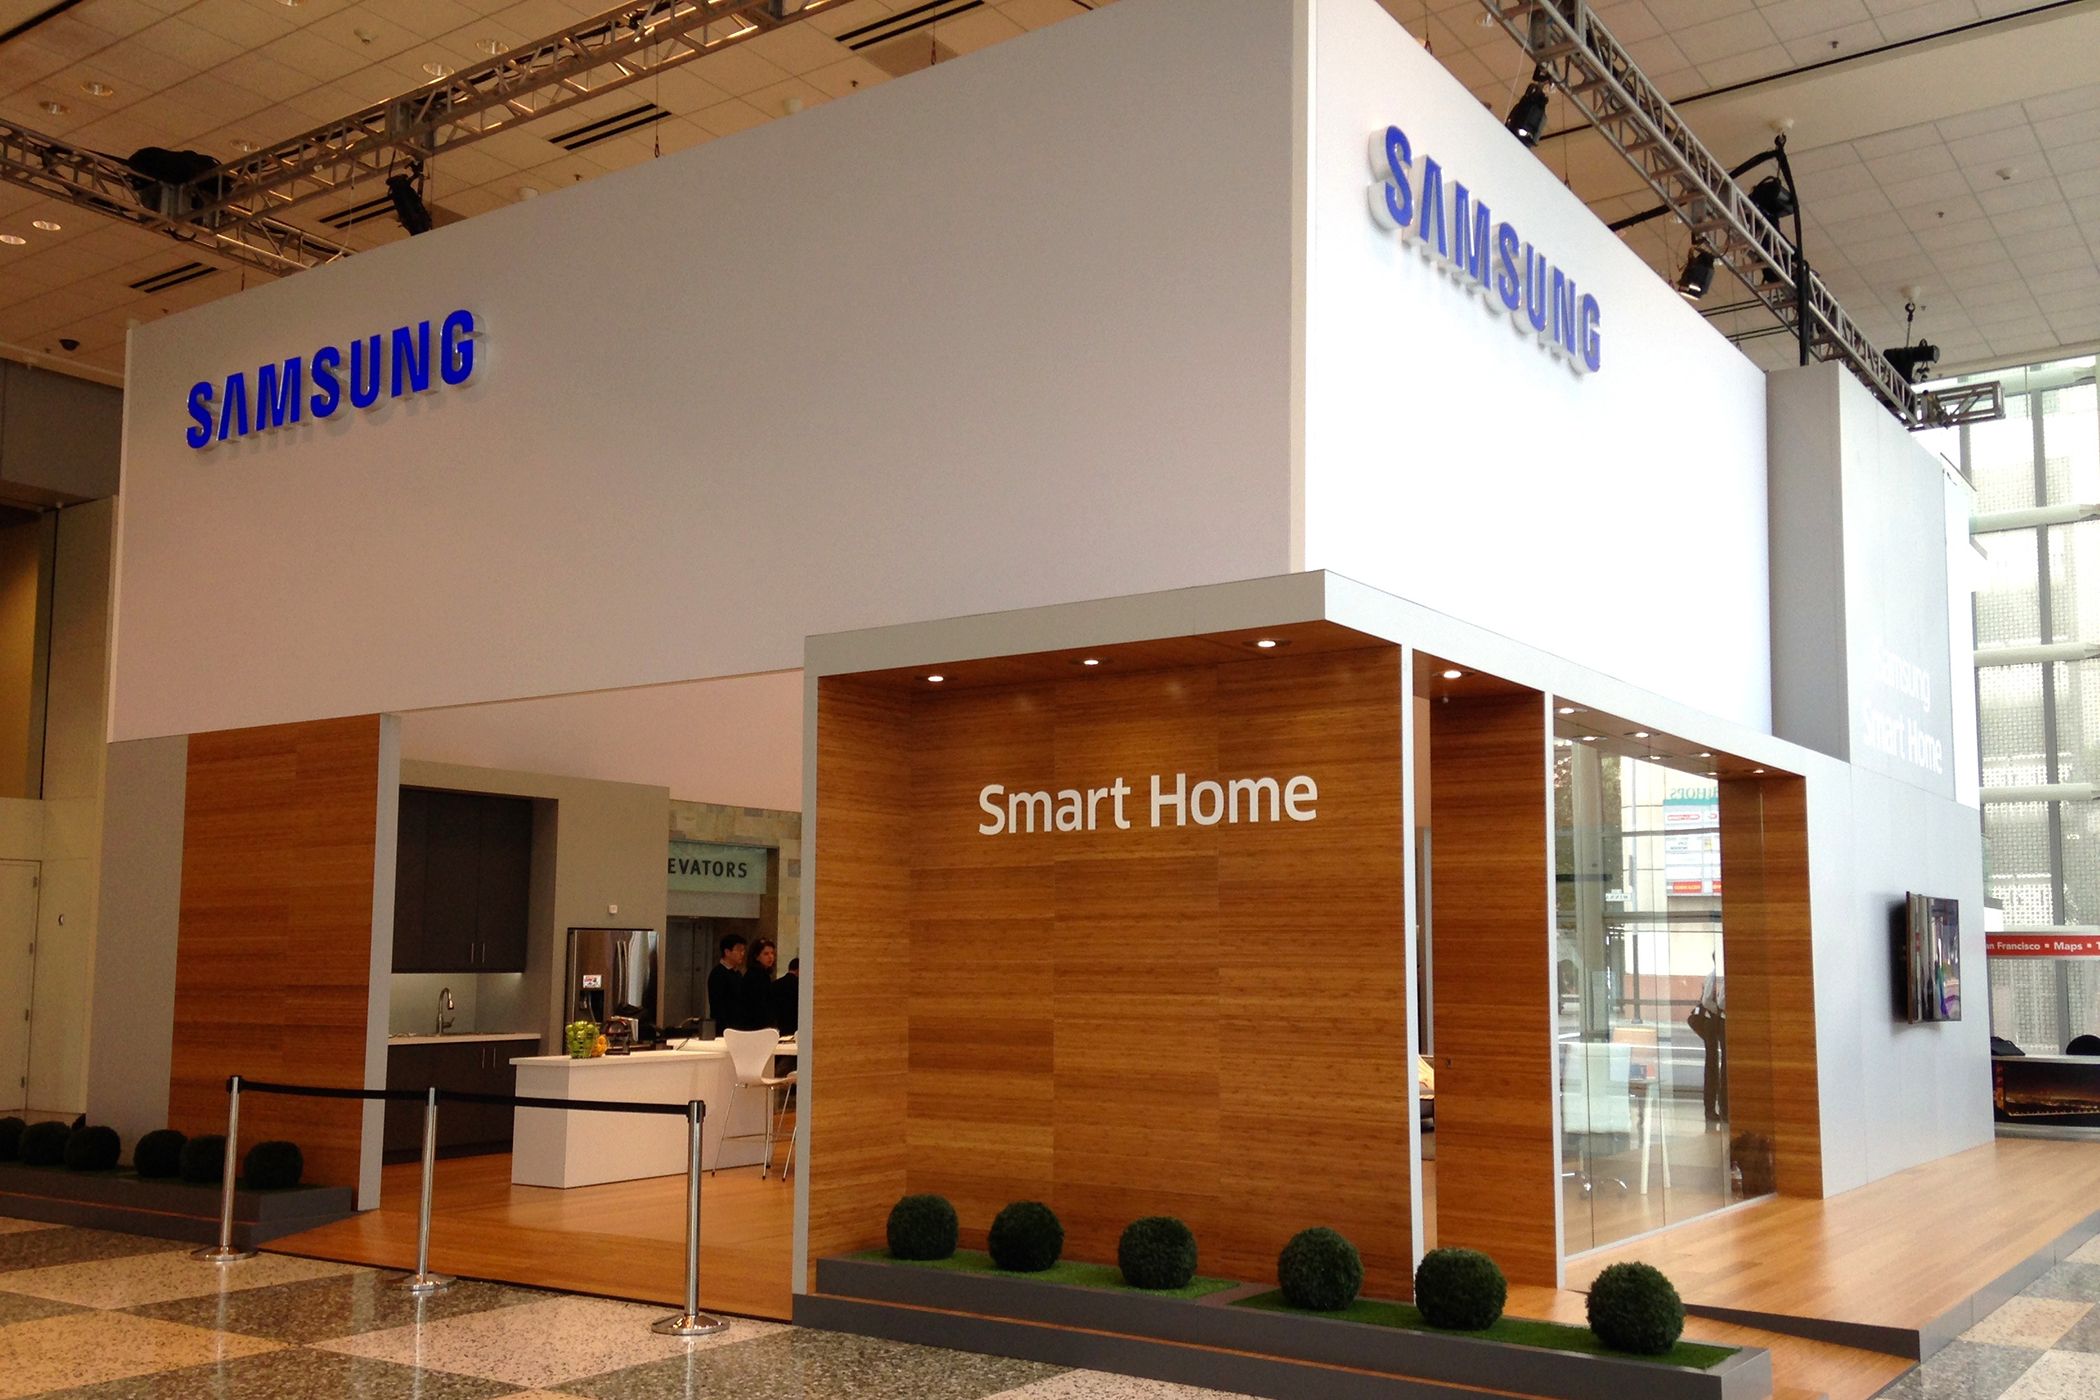 Image of a model Samsung Smart Home from Samsung Developer Conference 2014.